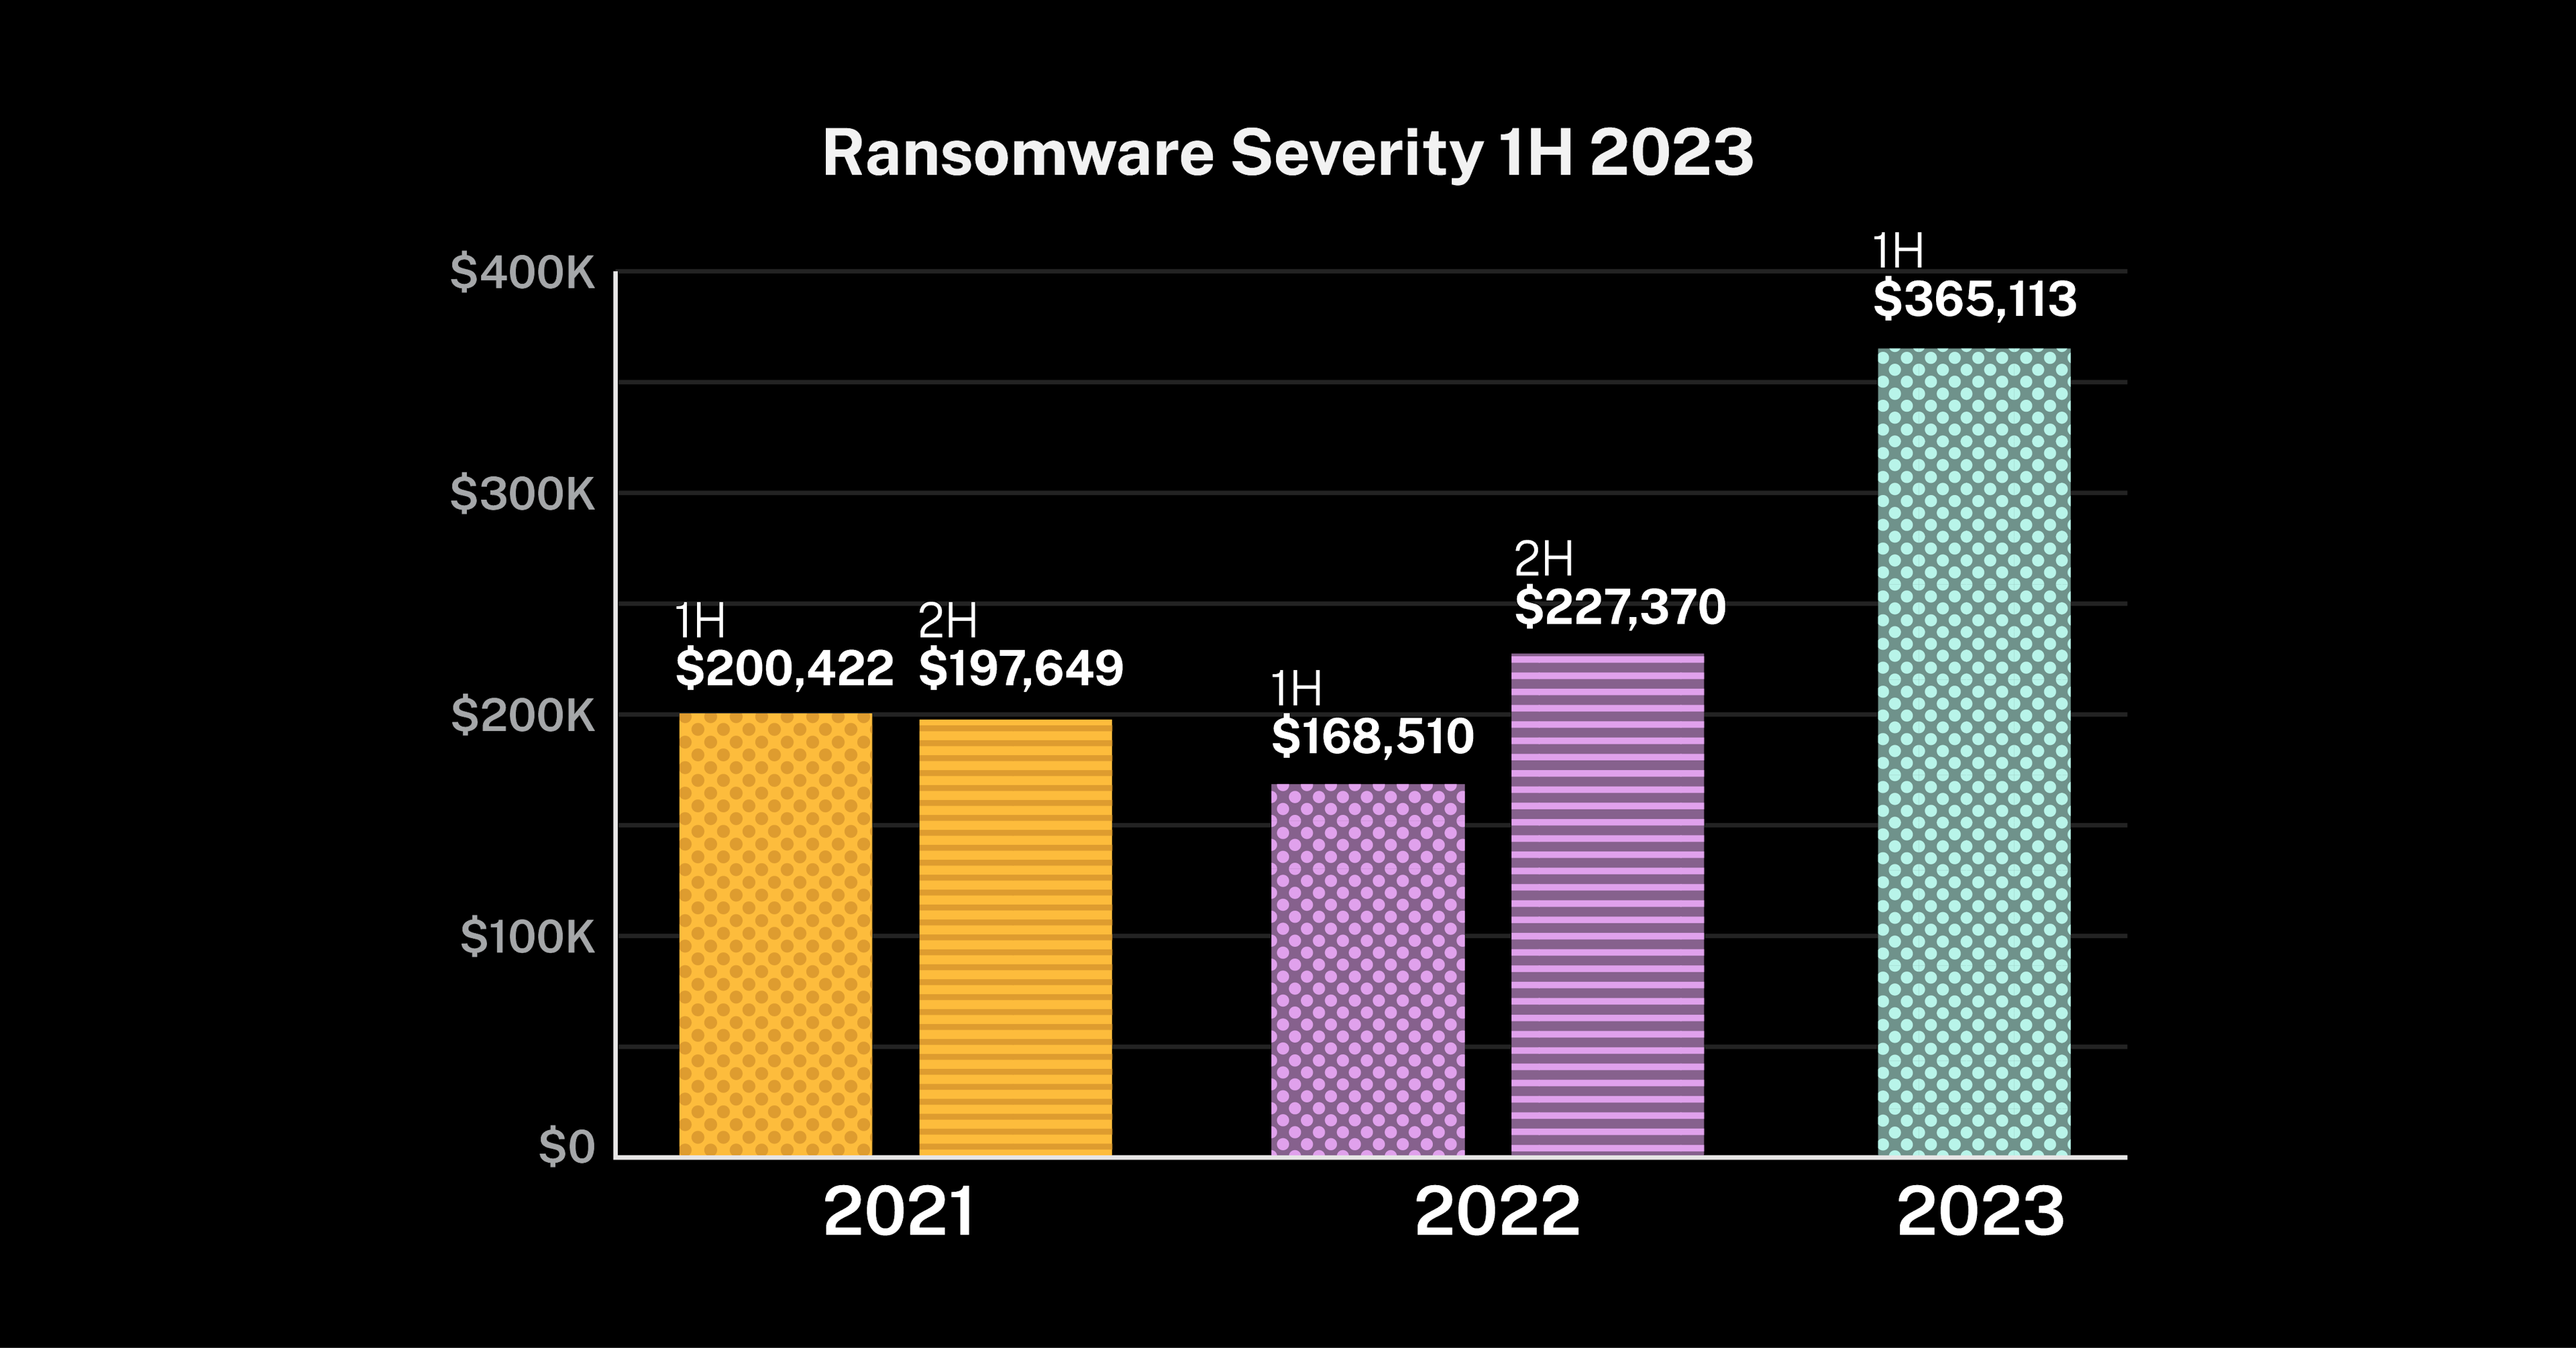 Blog Ransomware Severity 1H 2023